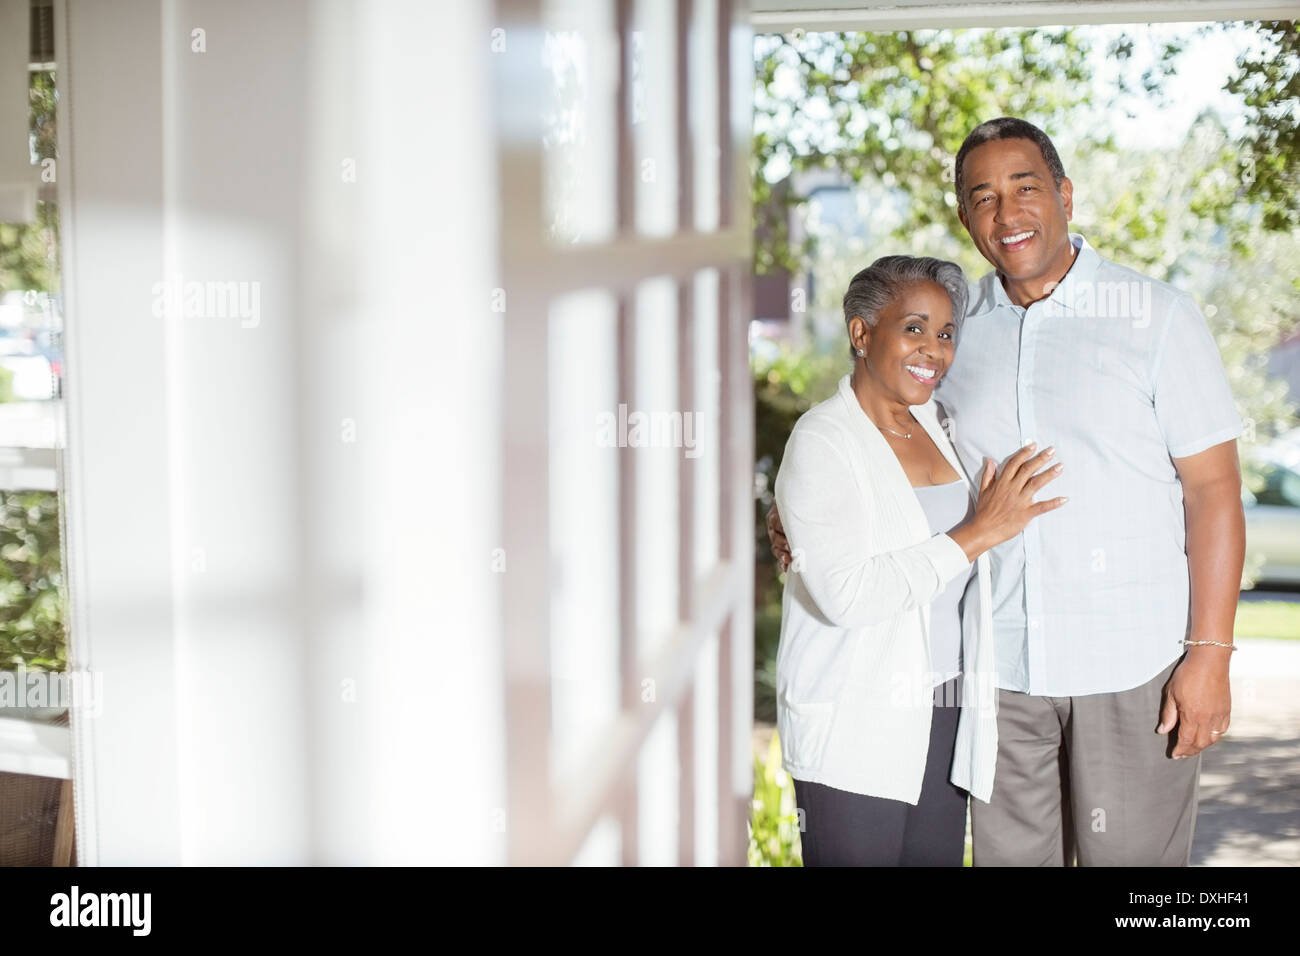 Portrait of smiling senior couple in doorway Stock Photo